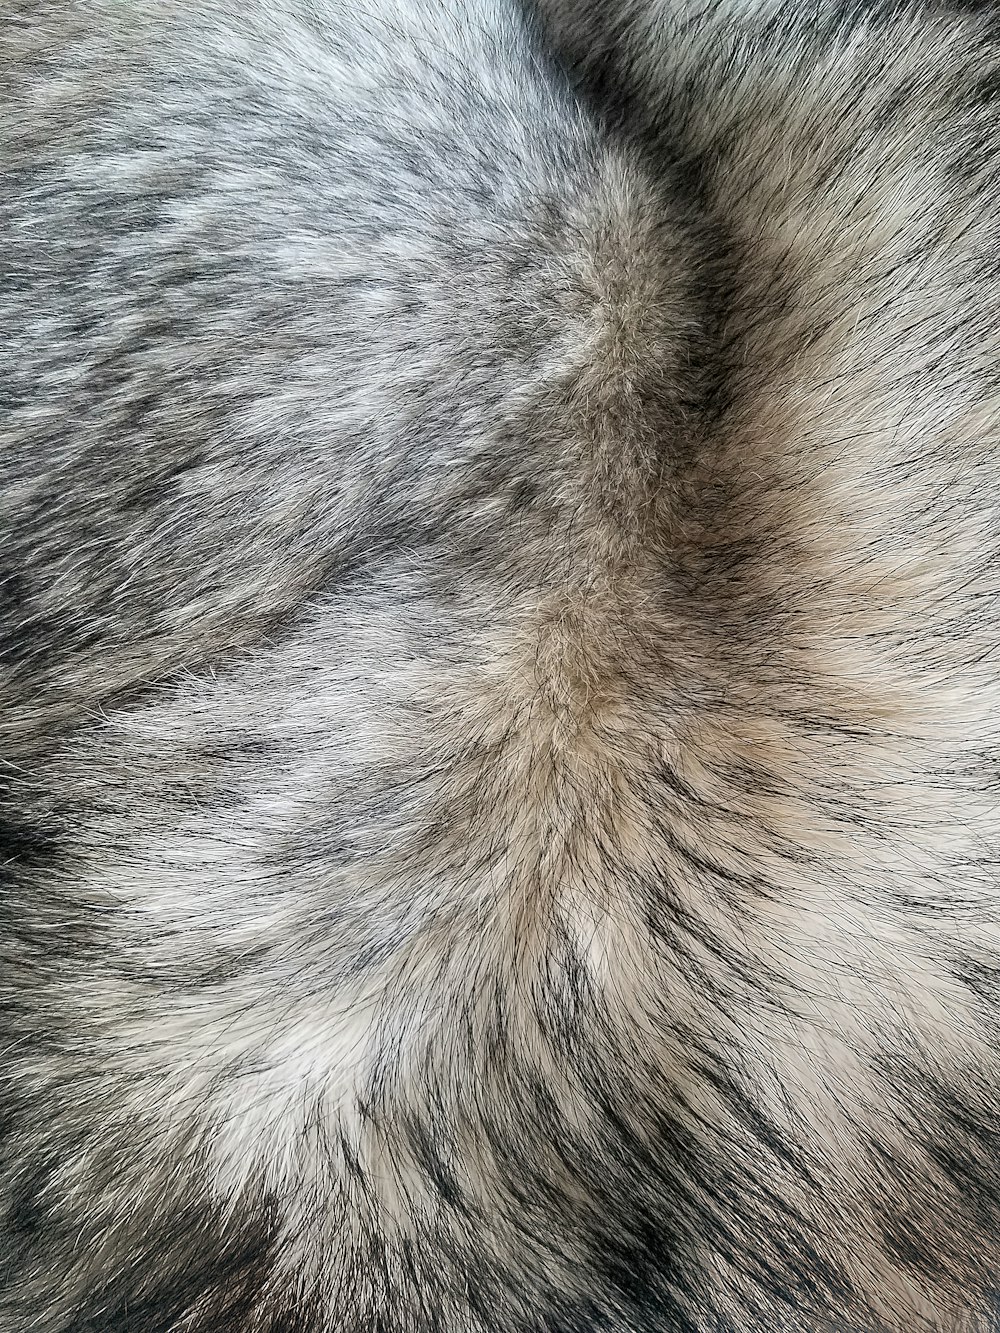 Faux Fur Pictures | Download Free Images on Unsplash